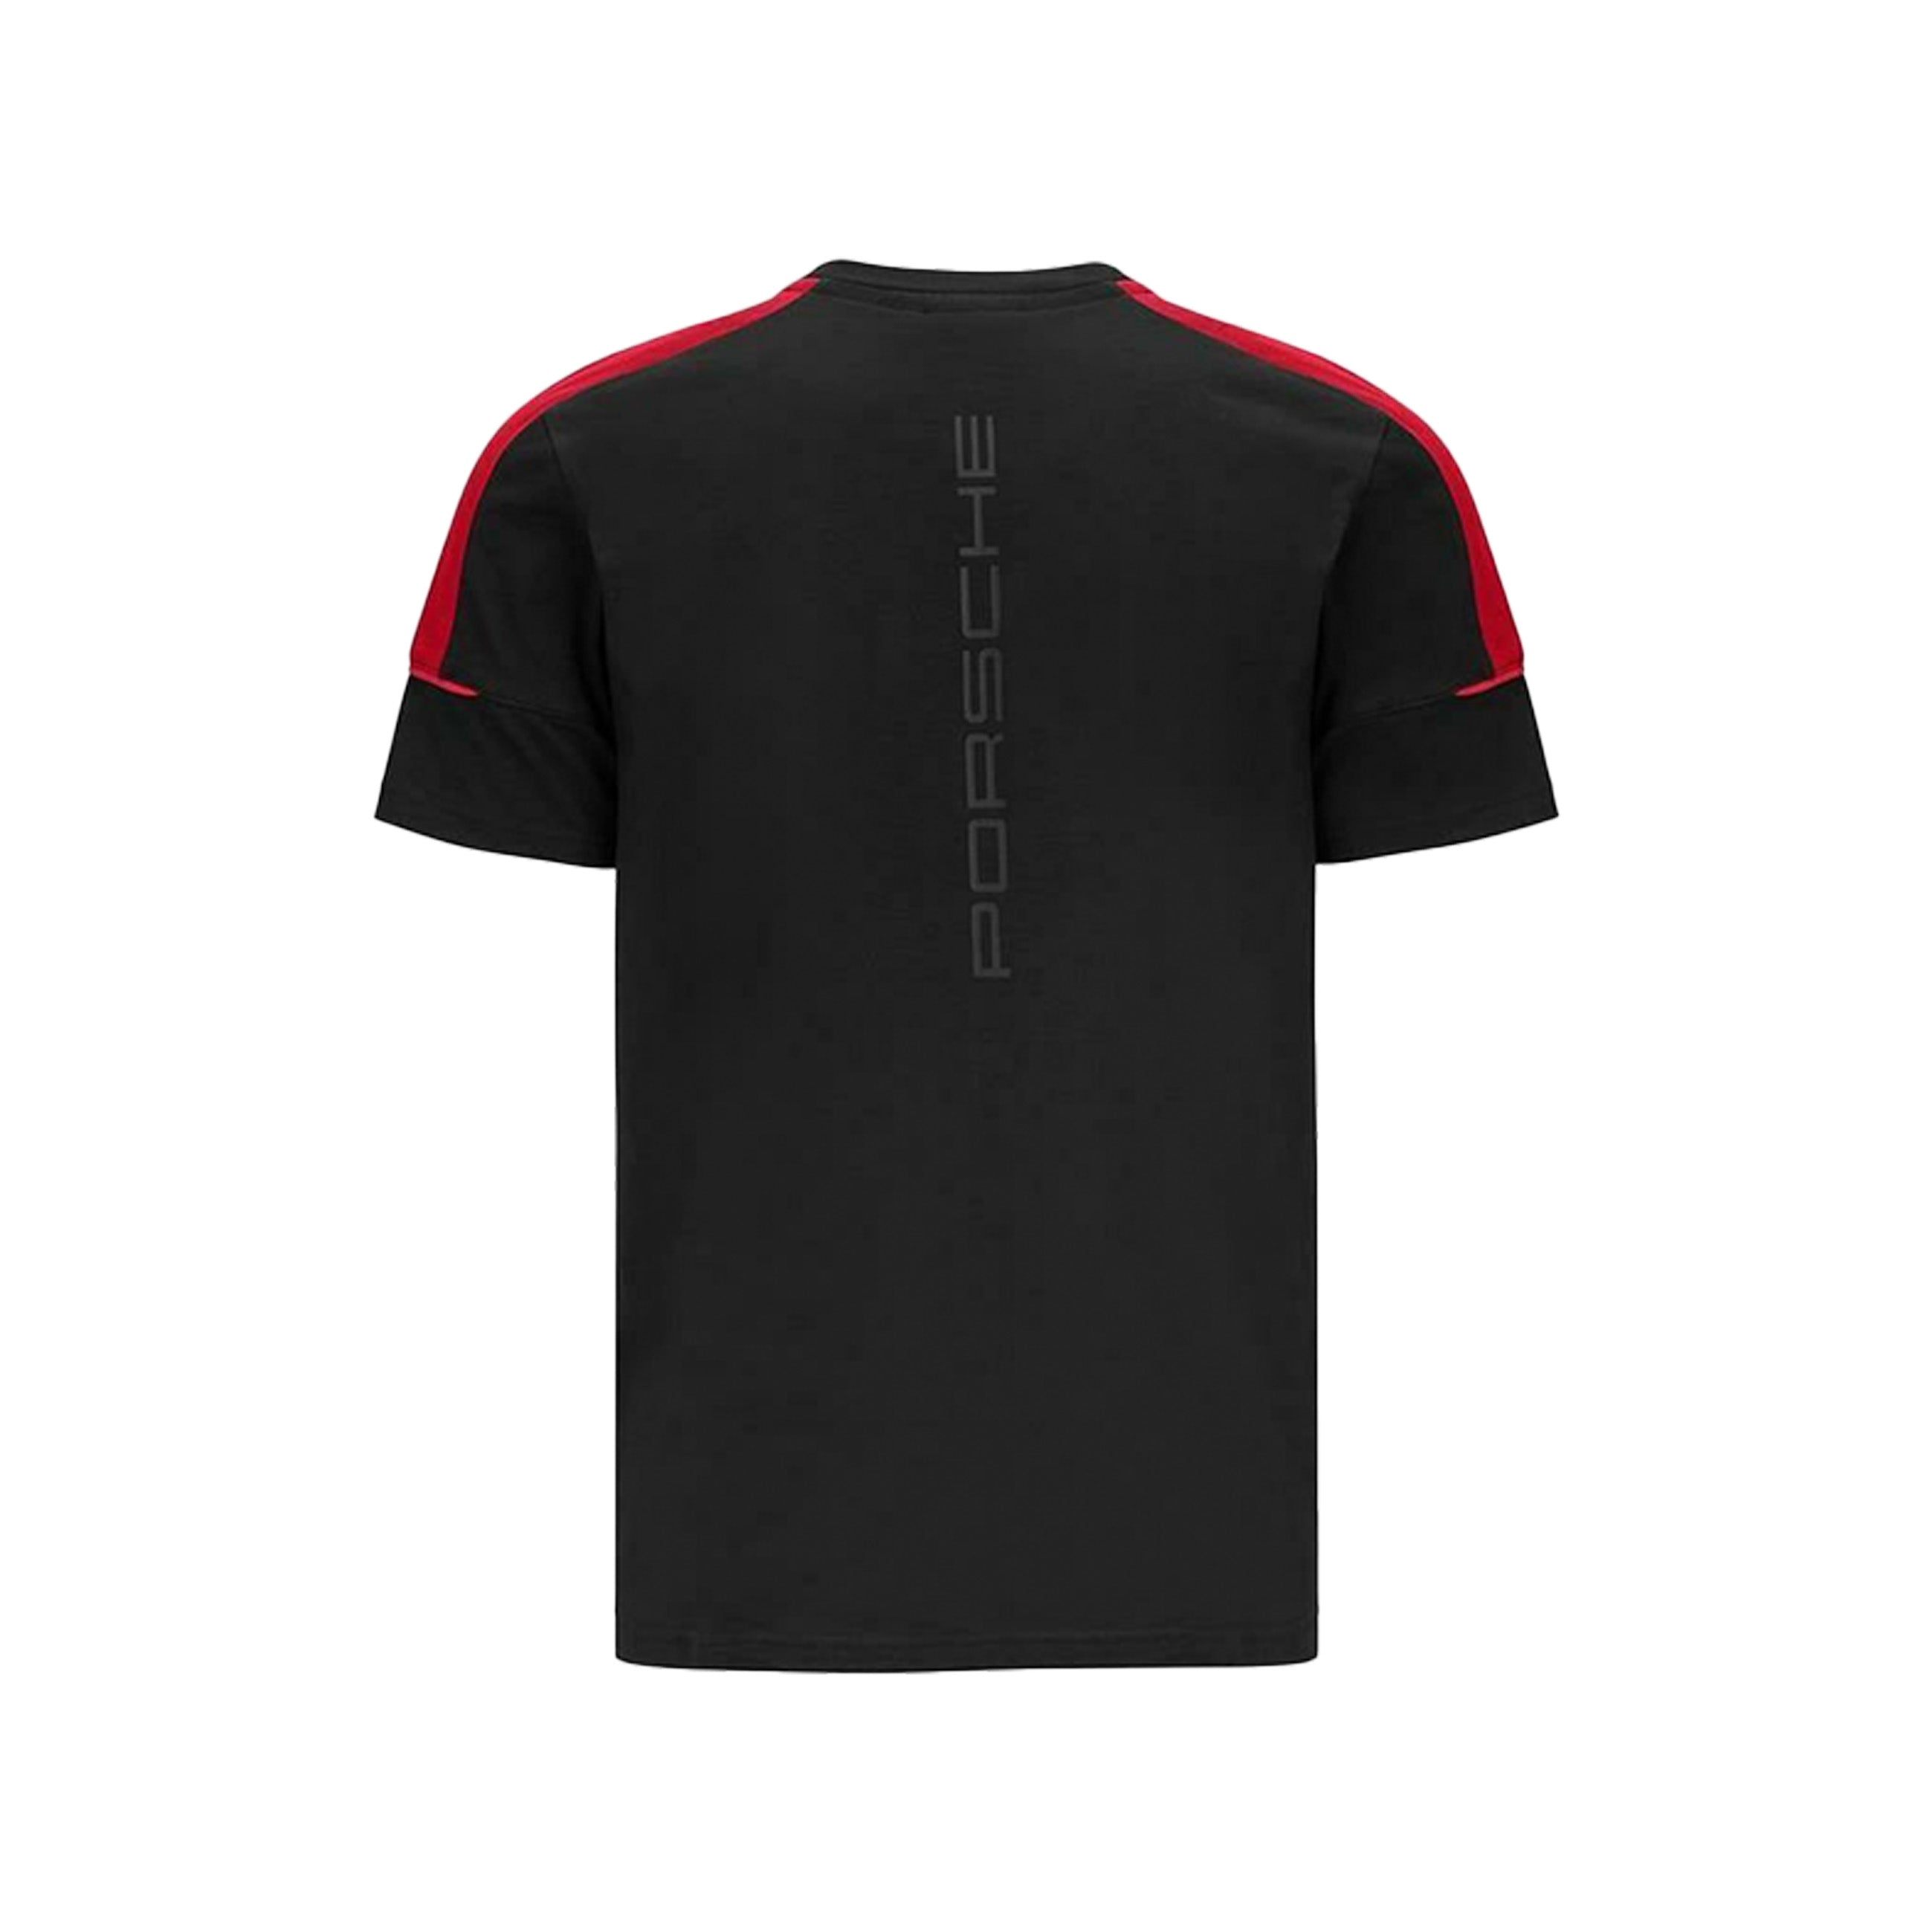 Porsche Motorsport Men's Fanwear T-Shirt Black